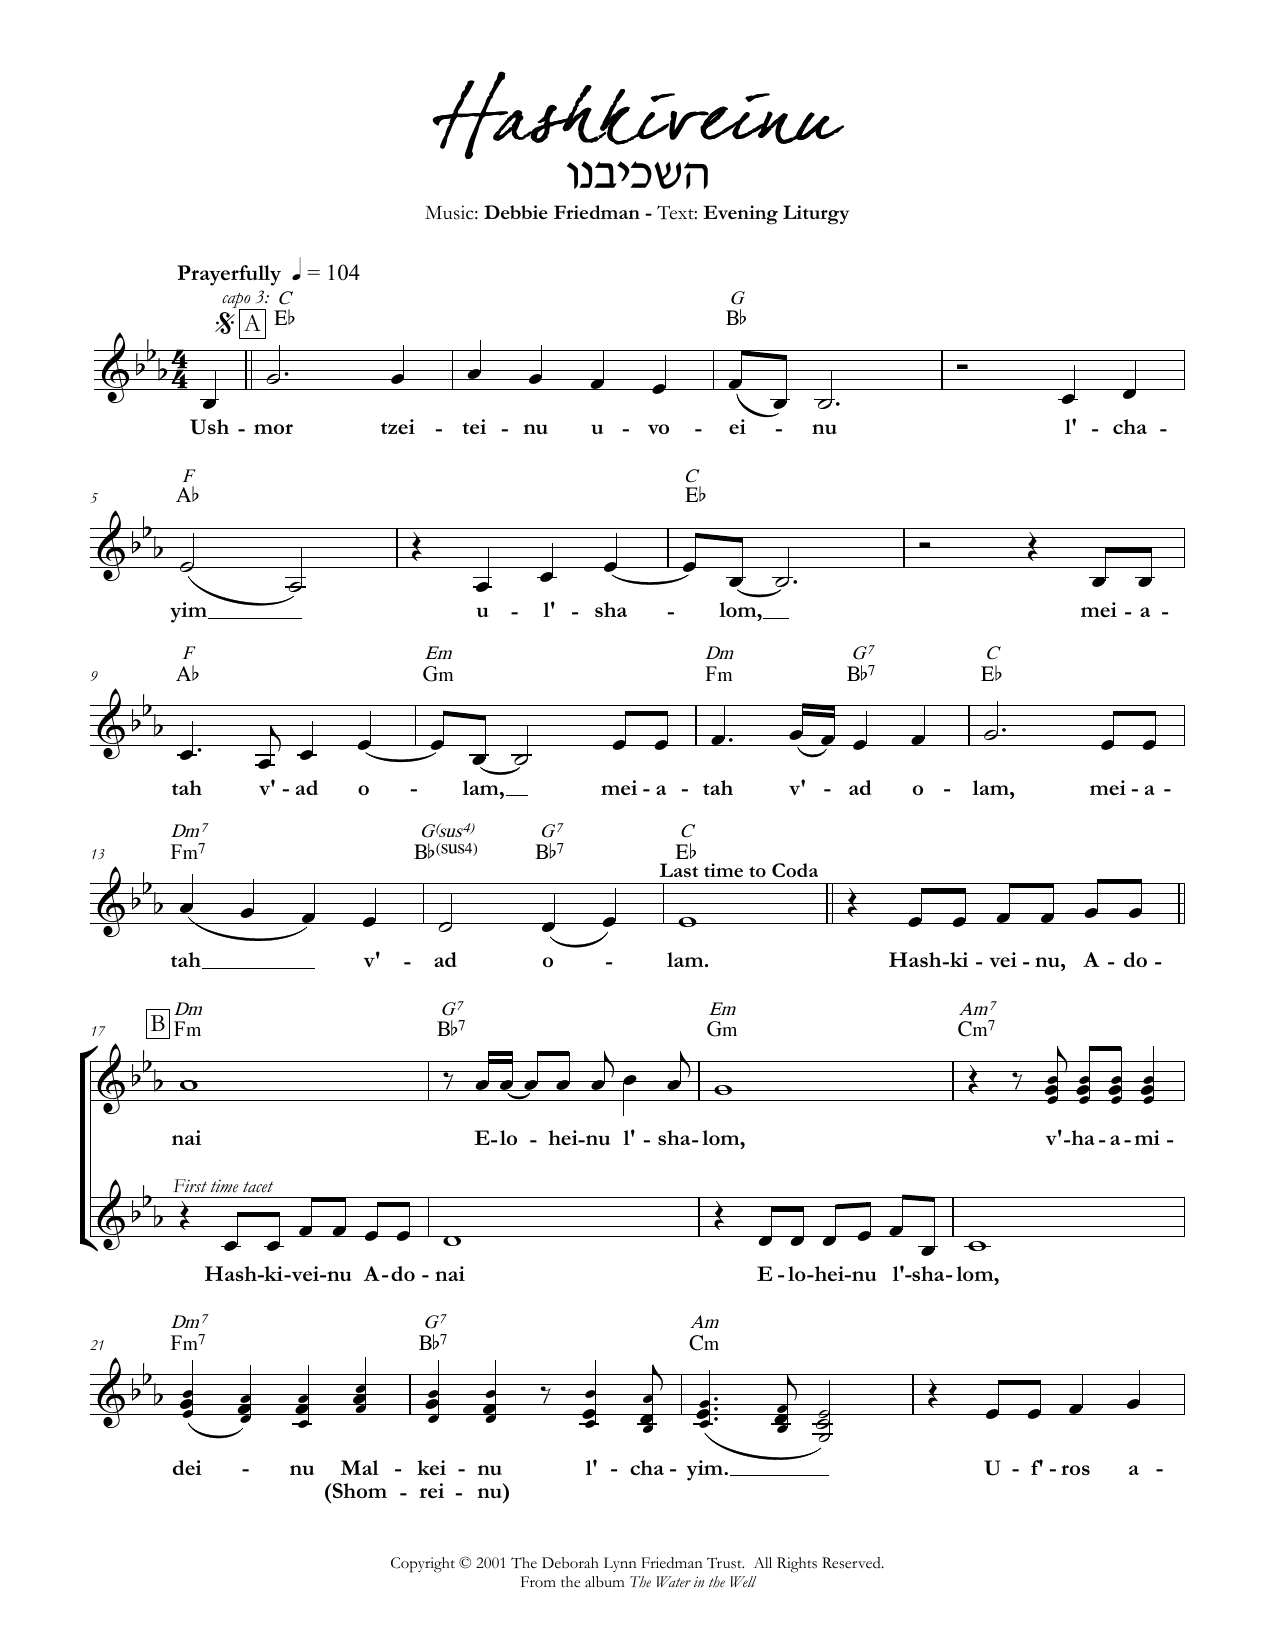 Debbie Friedman Hashkiveinu sheet music notes and chords arranged for Lead Sheet / Fake Book